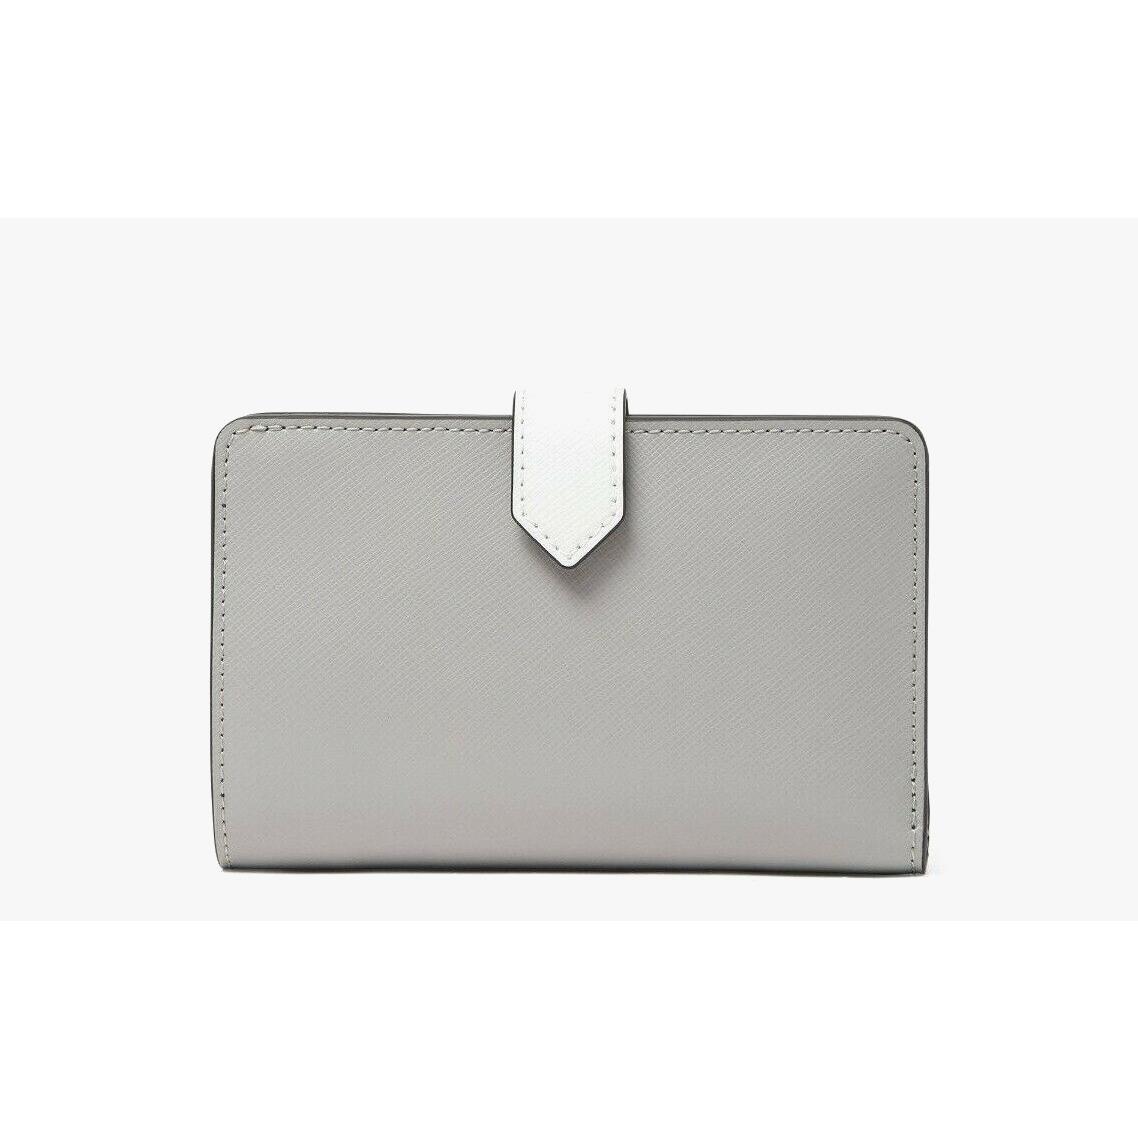 Kate Spade wallet  - Nimbus Grey multi